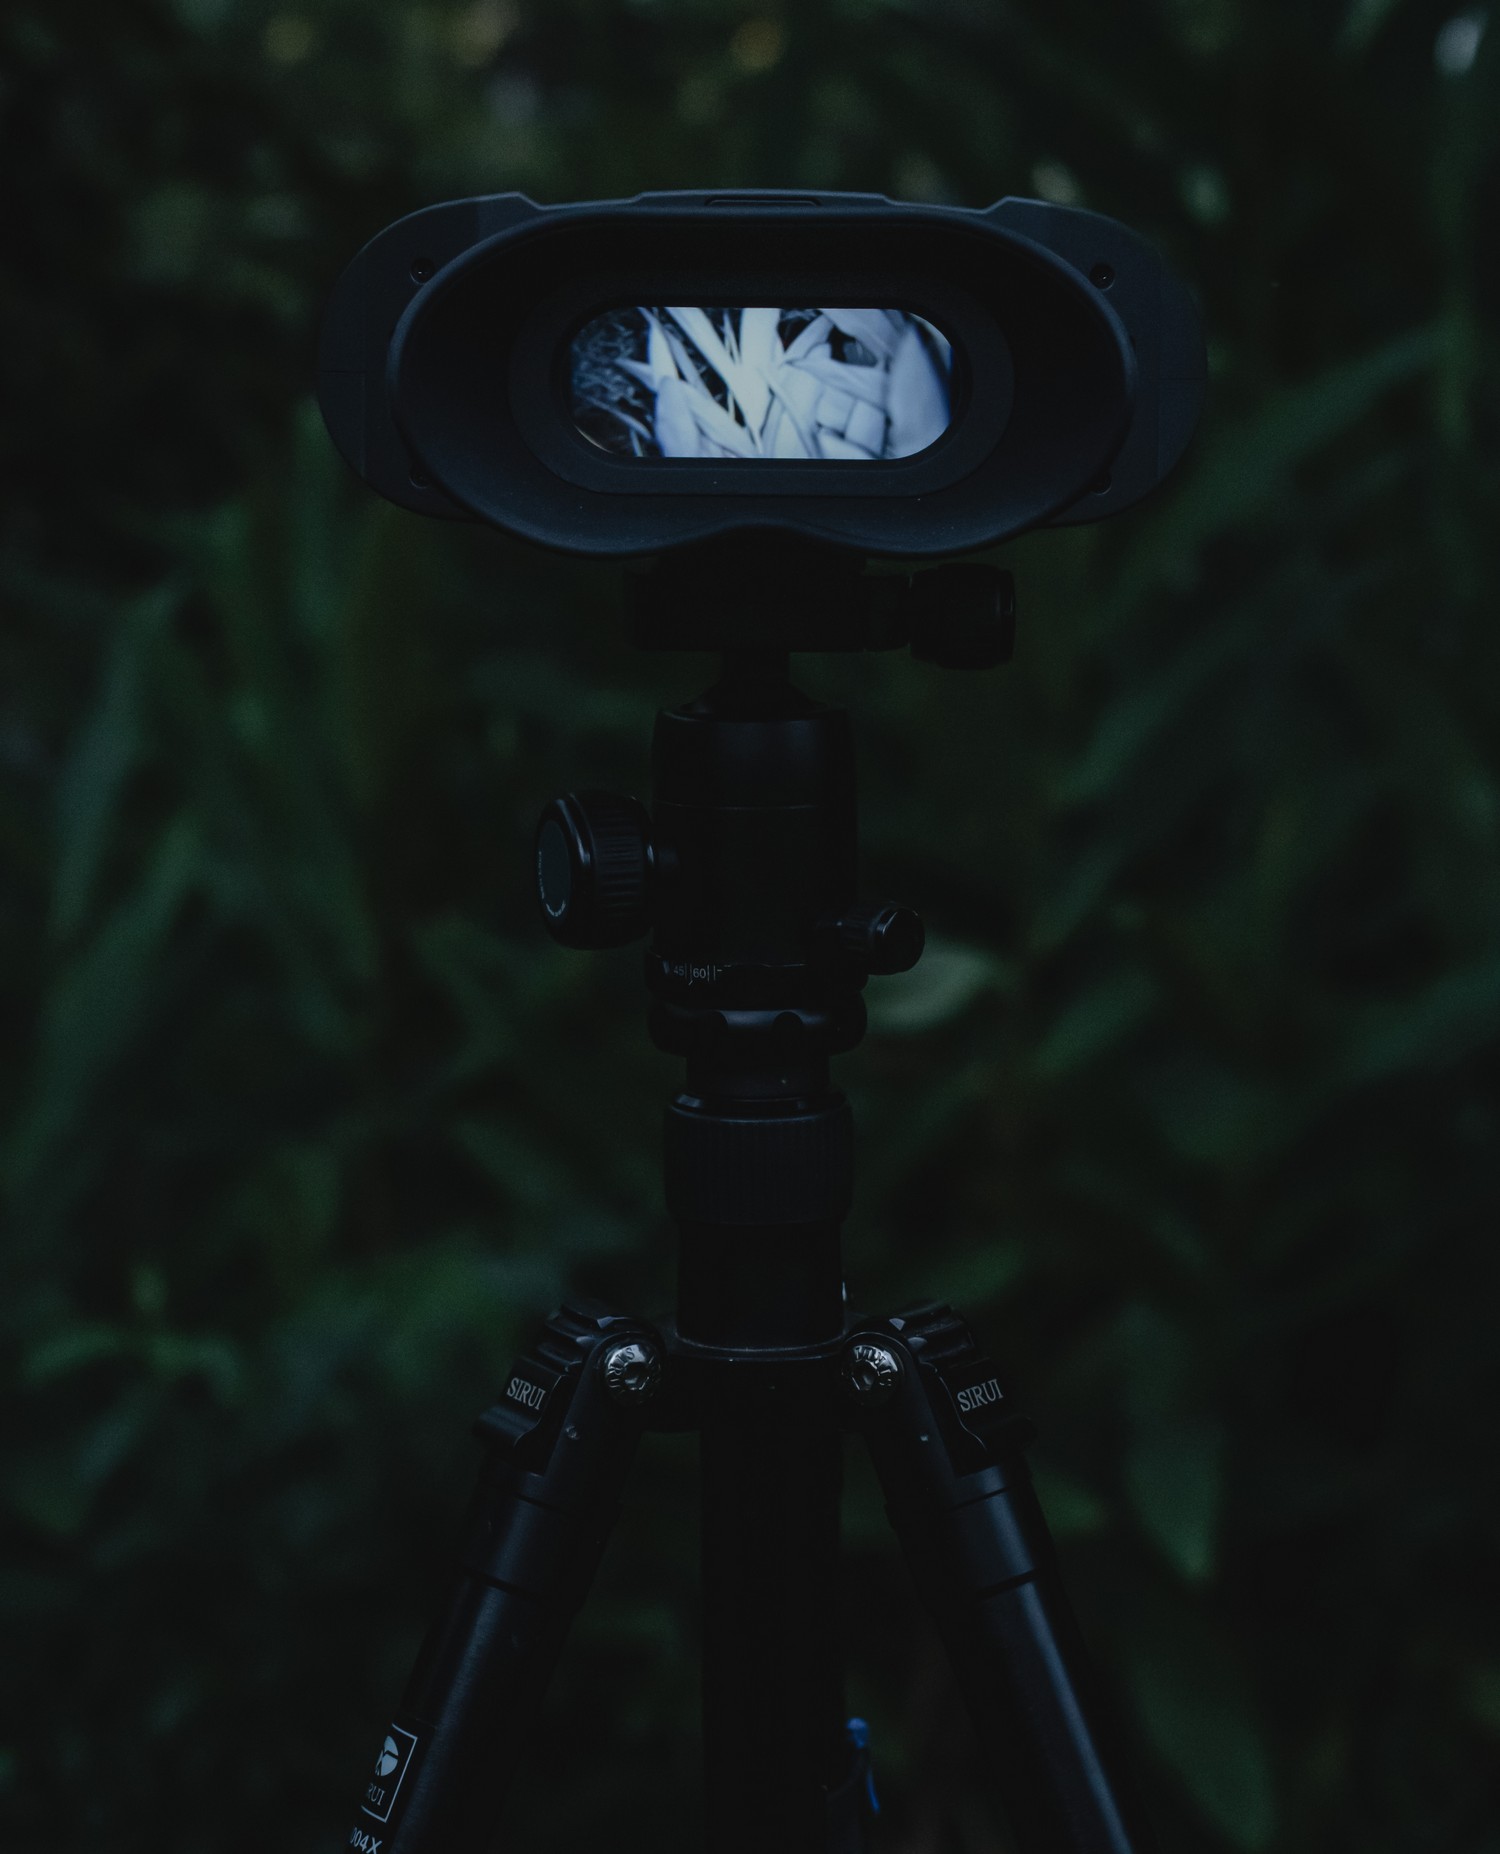 nachtzicht NVB 200 - Automatisch schakelen tussen dag en nacht dubbele modus